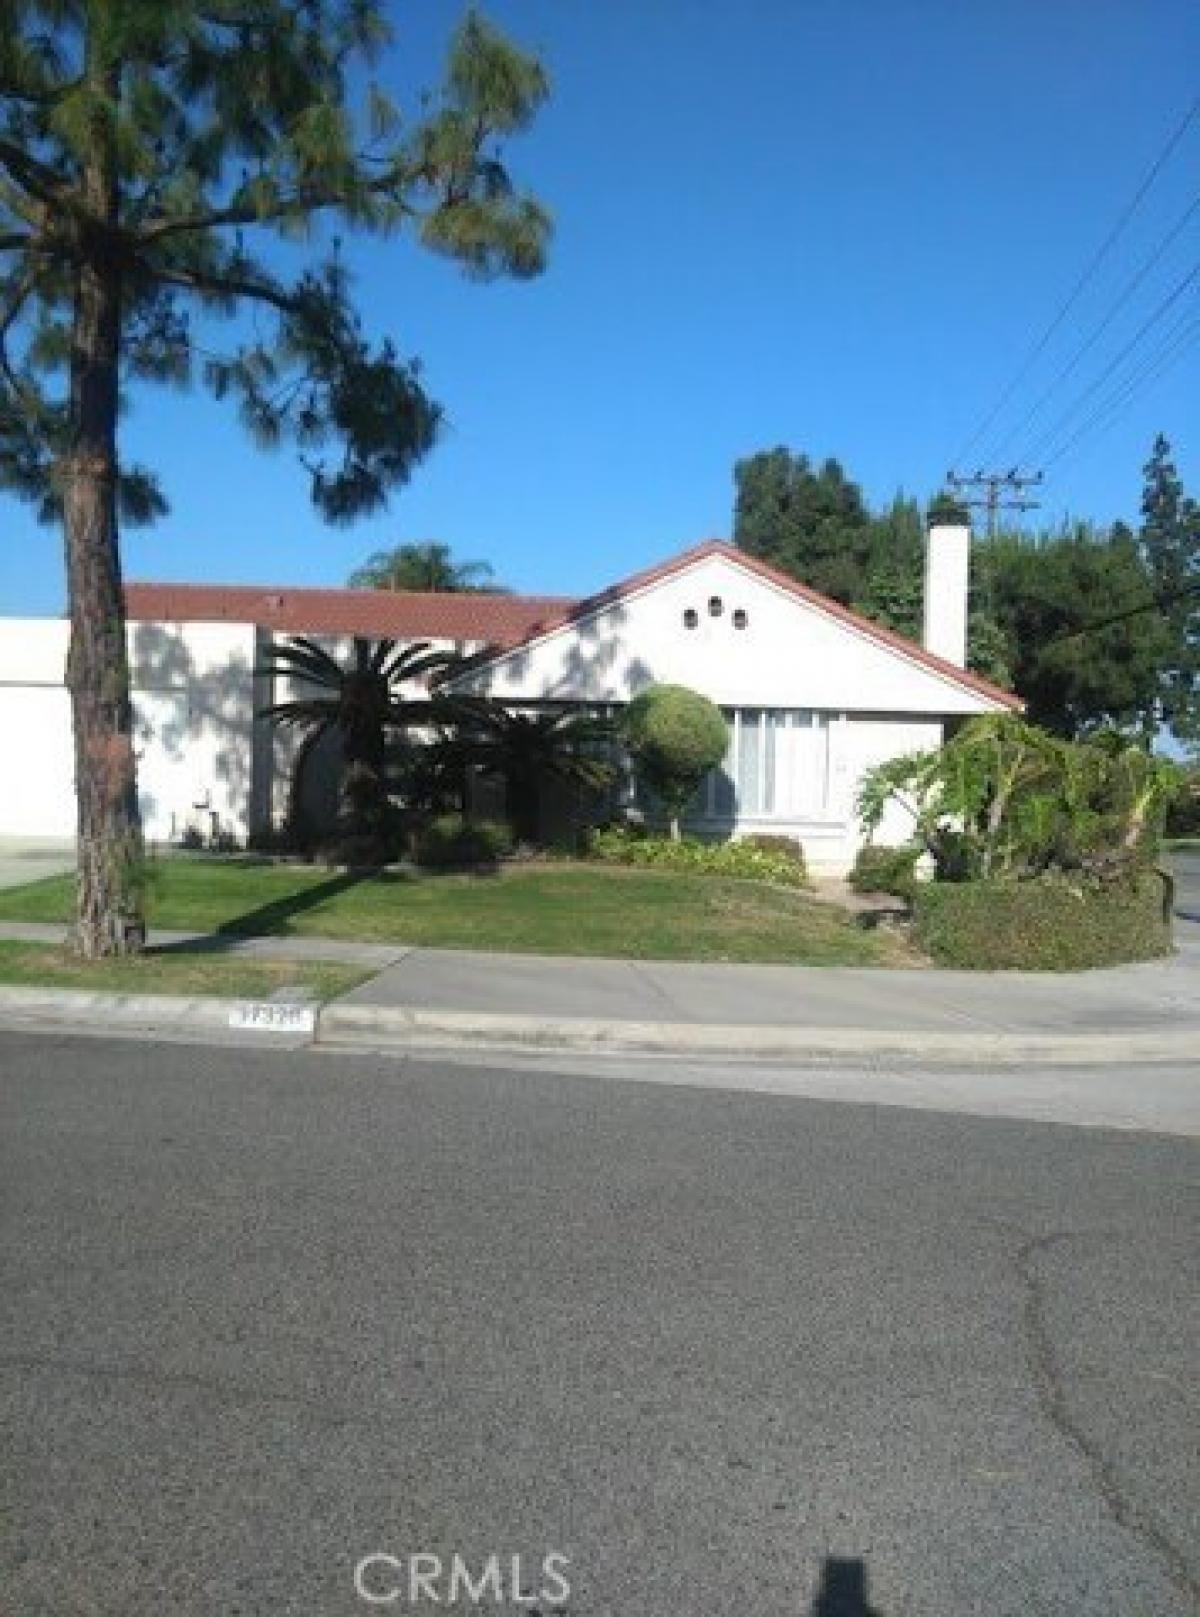 Picture of Home For Rent in Cerritos, California, United States